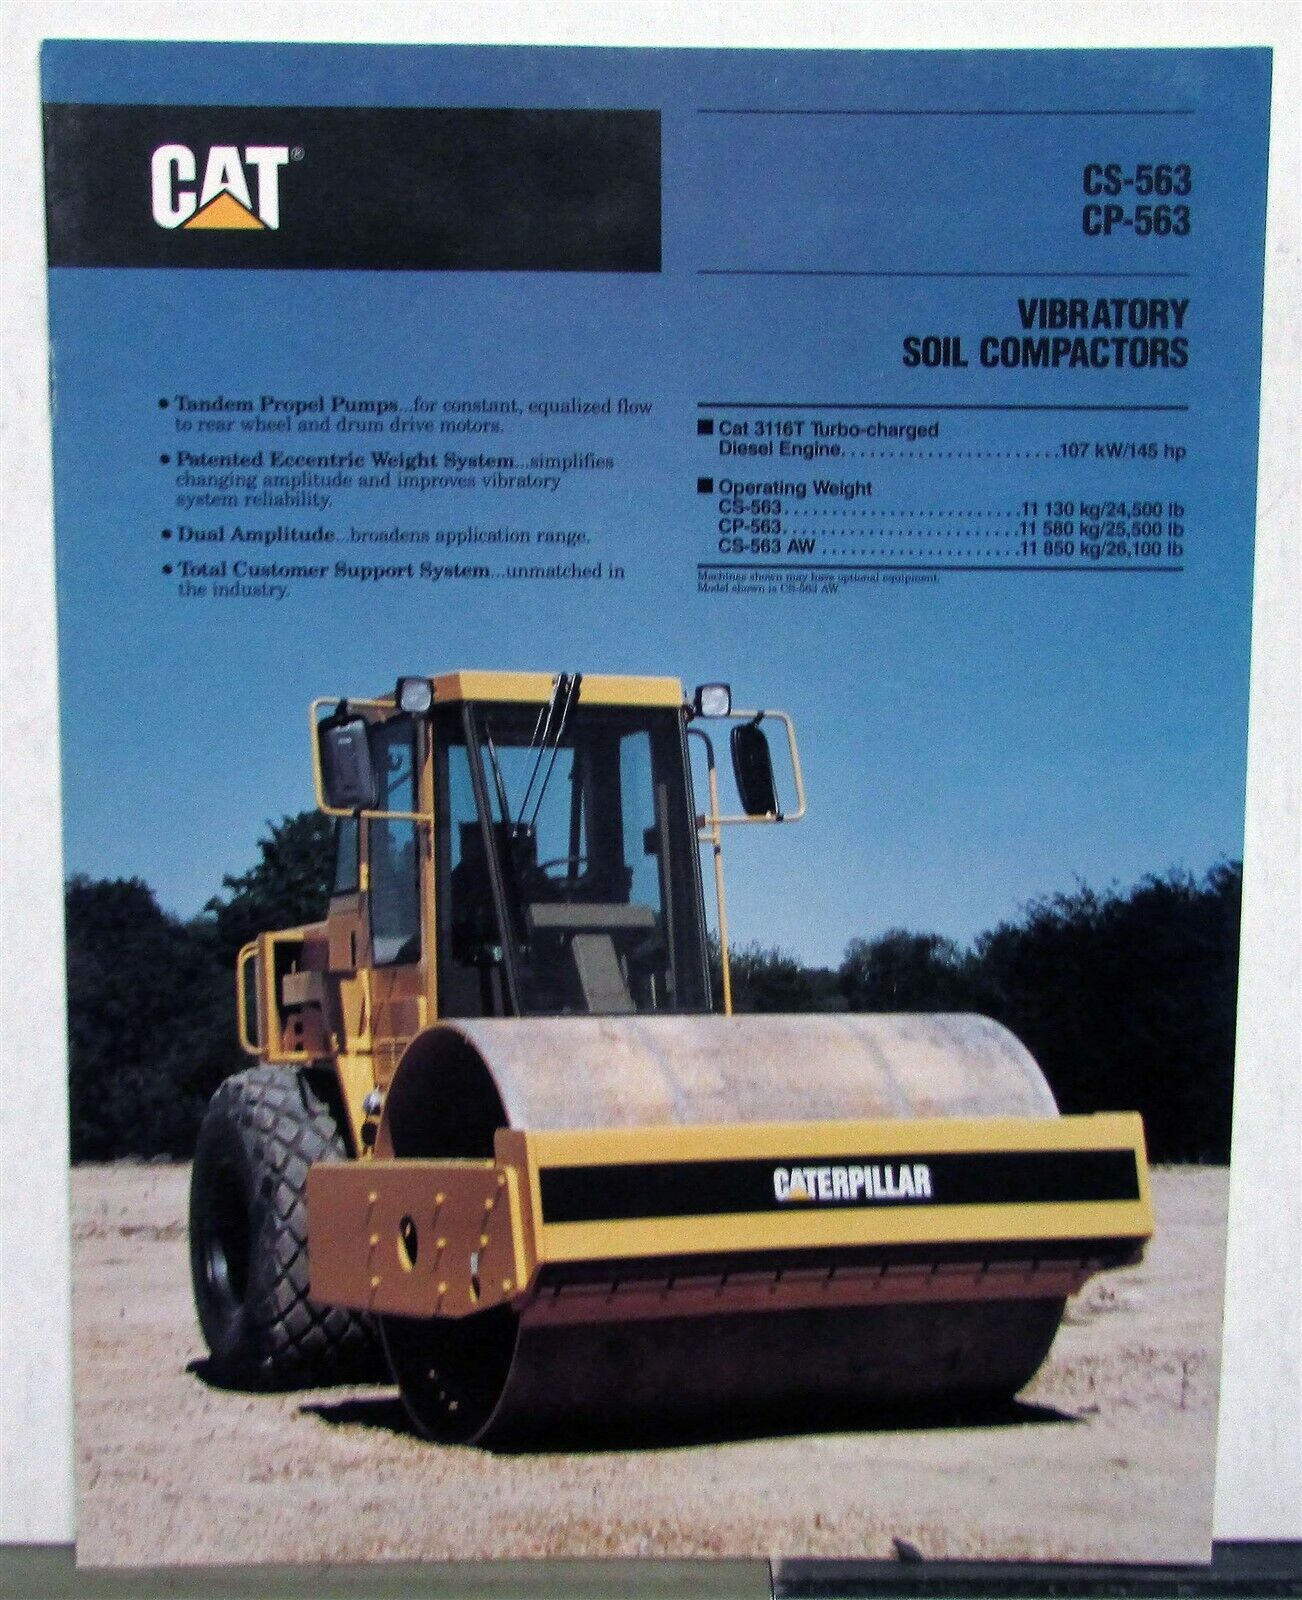 1992 Caterpillar CS 563 CP 563 Vibratory Soil Compactor Construction Sale Folder